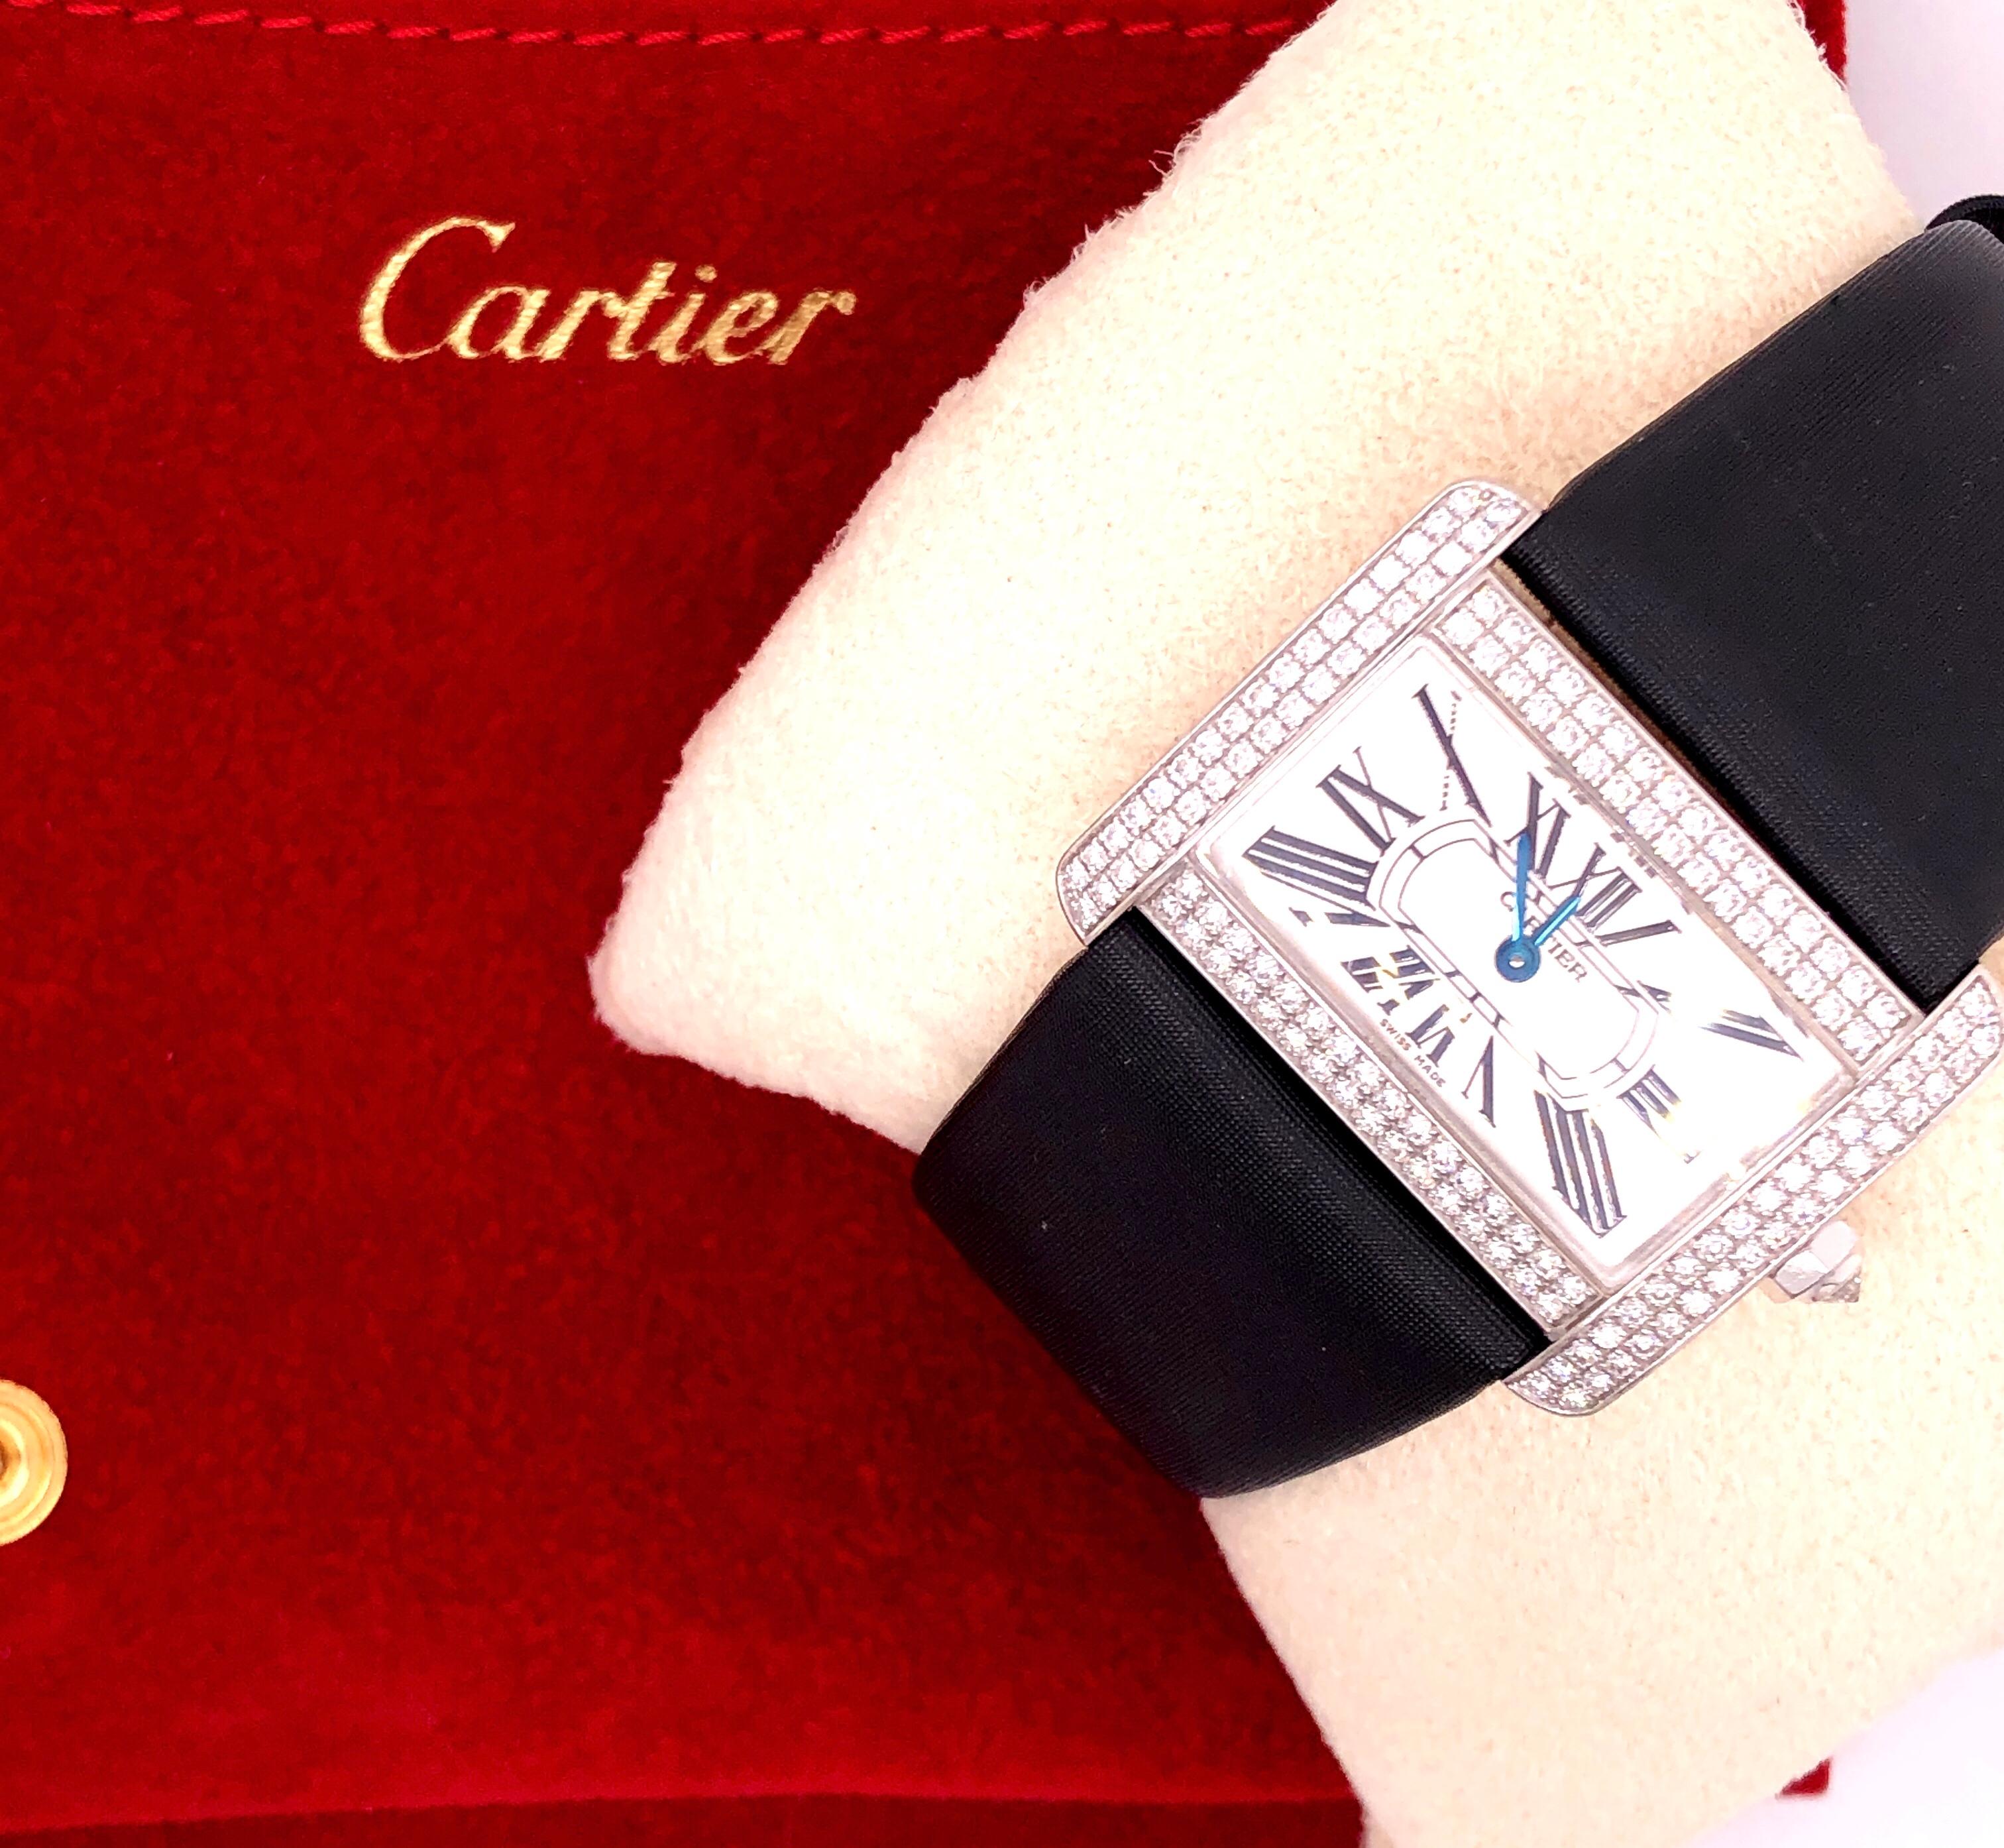 Cartier 18 Karat White Gold Mini Tank Divan Watch, Diamond Paved Case, Fabric Strap, 18 Karat Gold Diamond Paved Buckle, Quartz Movement.
153 X Round Brilliant Cut Diamond
1.36 ct. total diamond weight.
37.00 grams total weight.
Ref no.